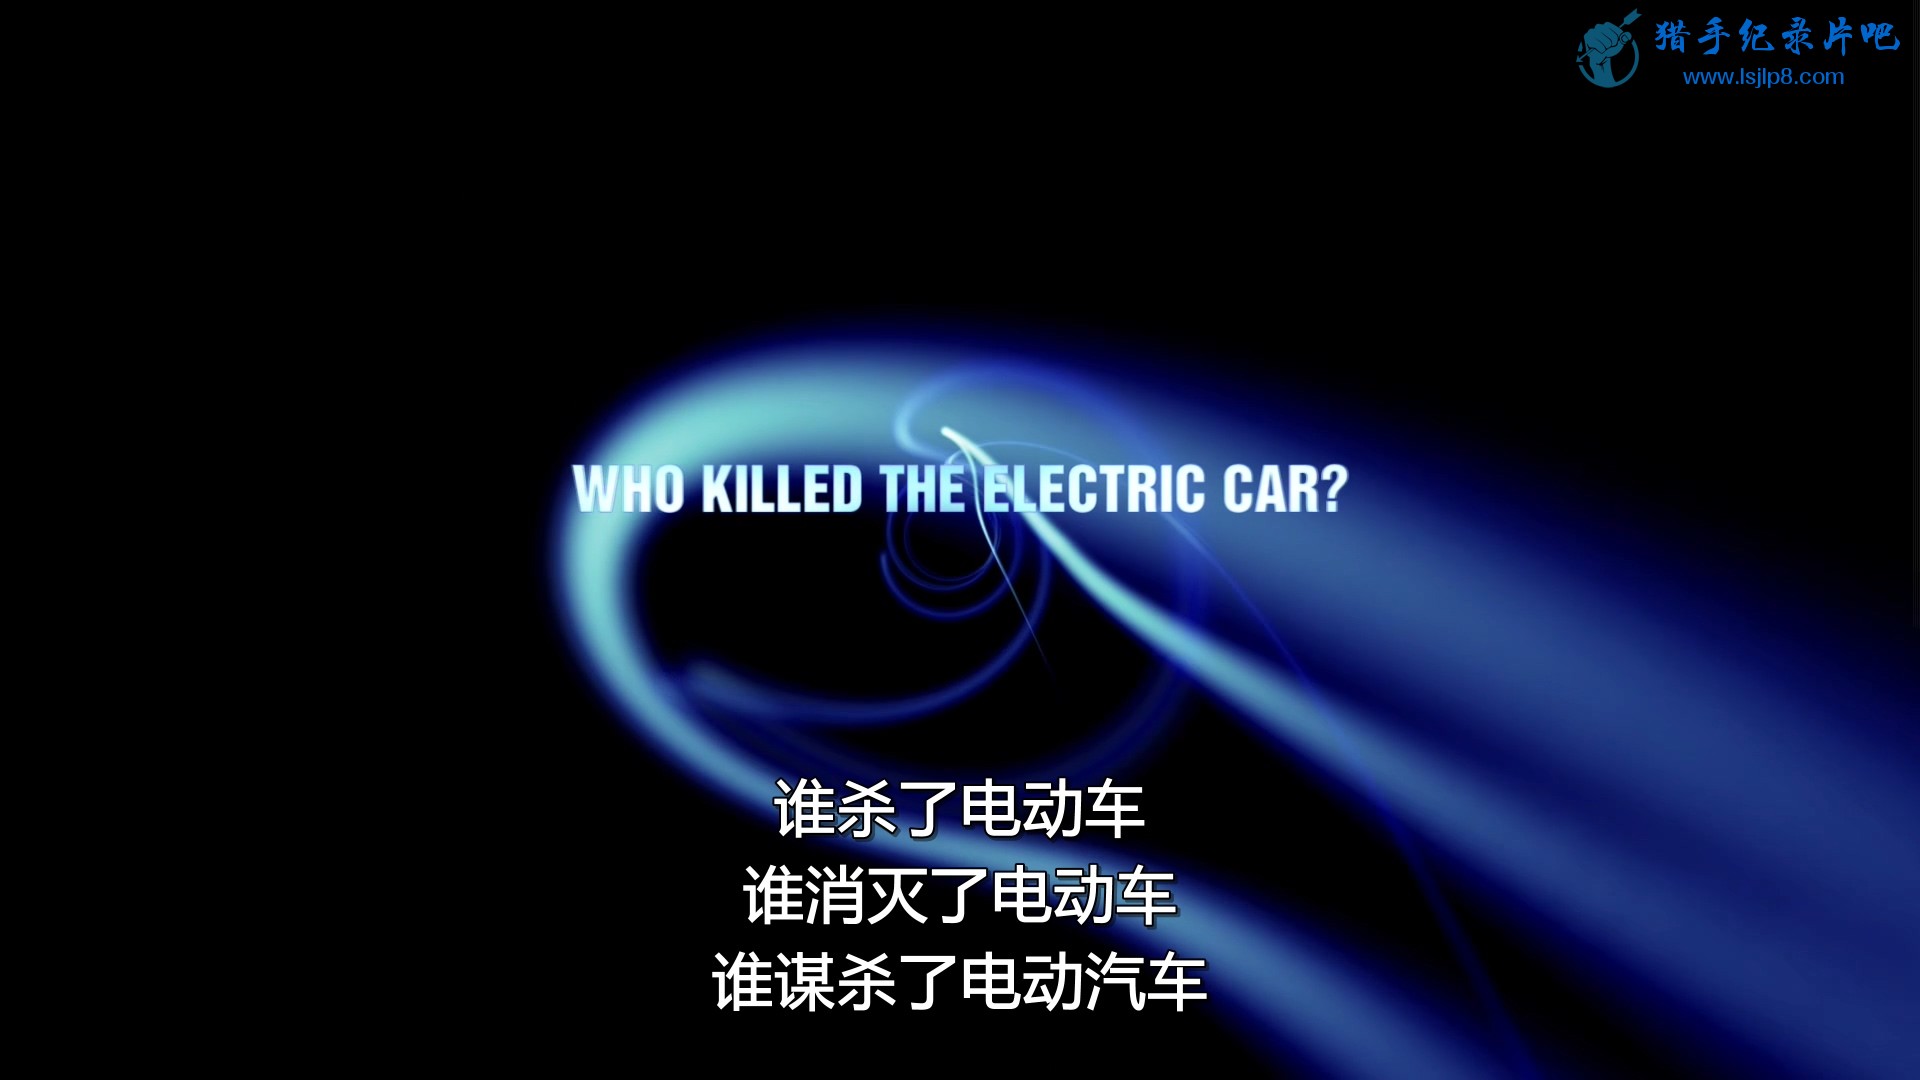 Who.Killed.The.Electric.Car.2006.1080p.Amazon.WEB-DL.DD5.1.H.264-QOQ.mkv_2021080.jpg